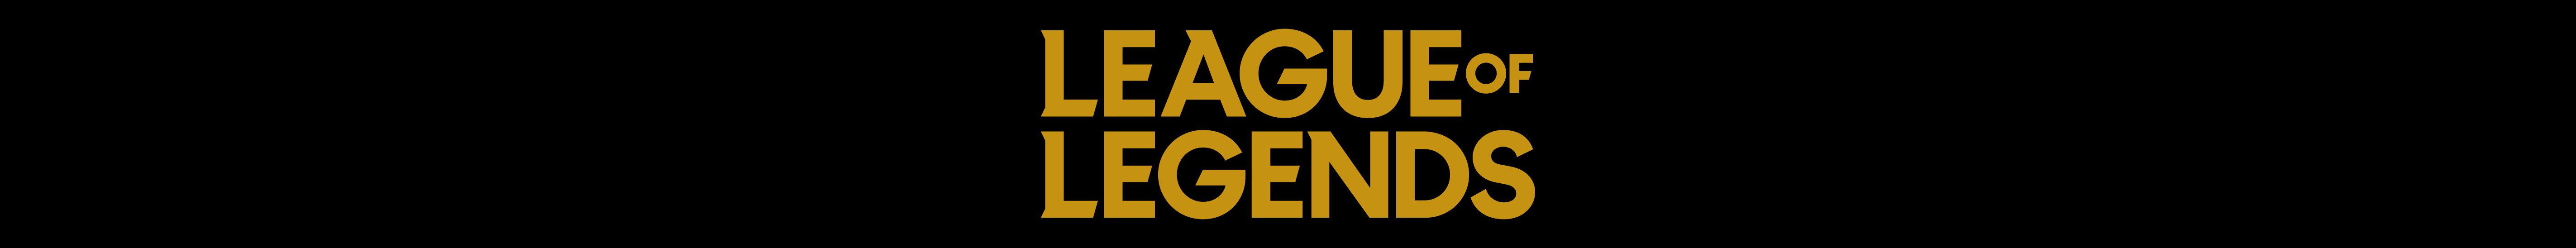 League Of Legends - Banner